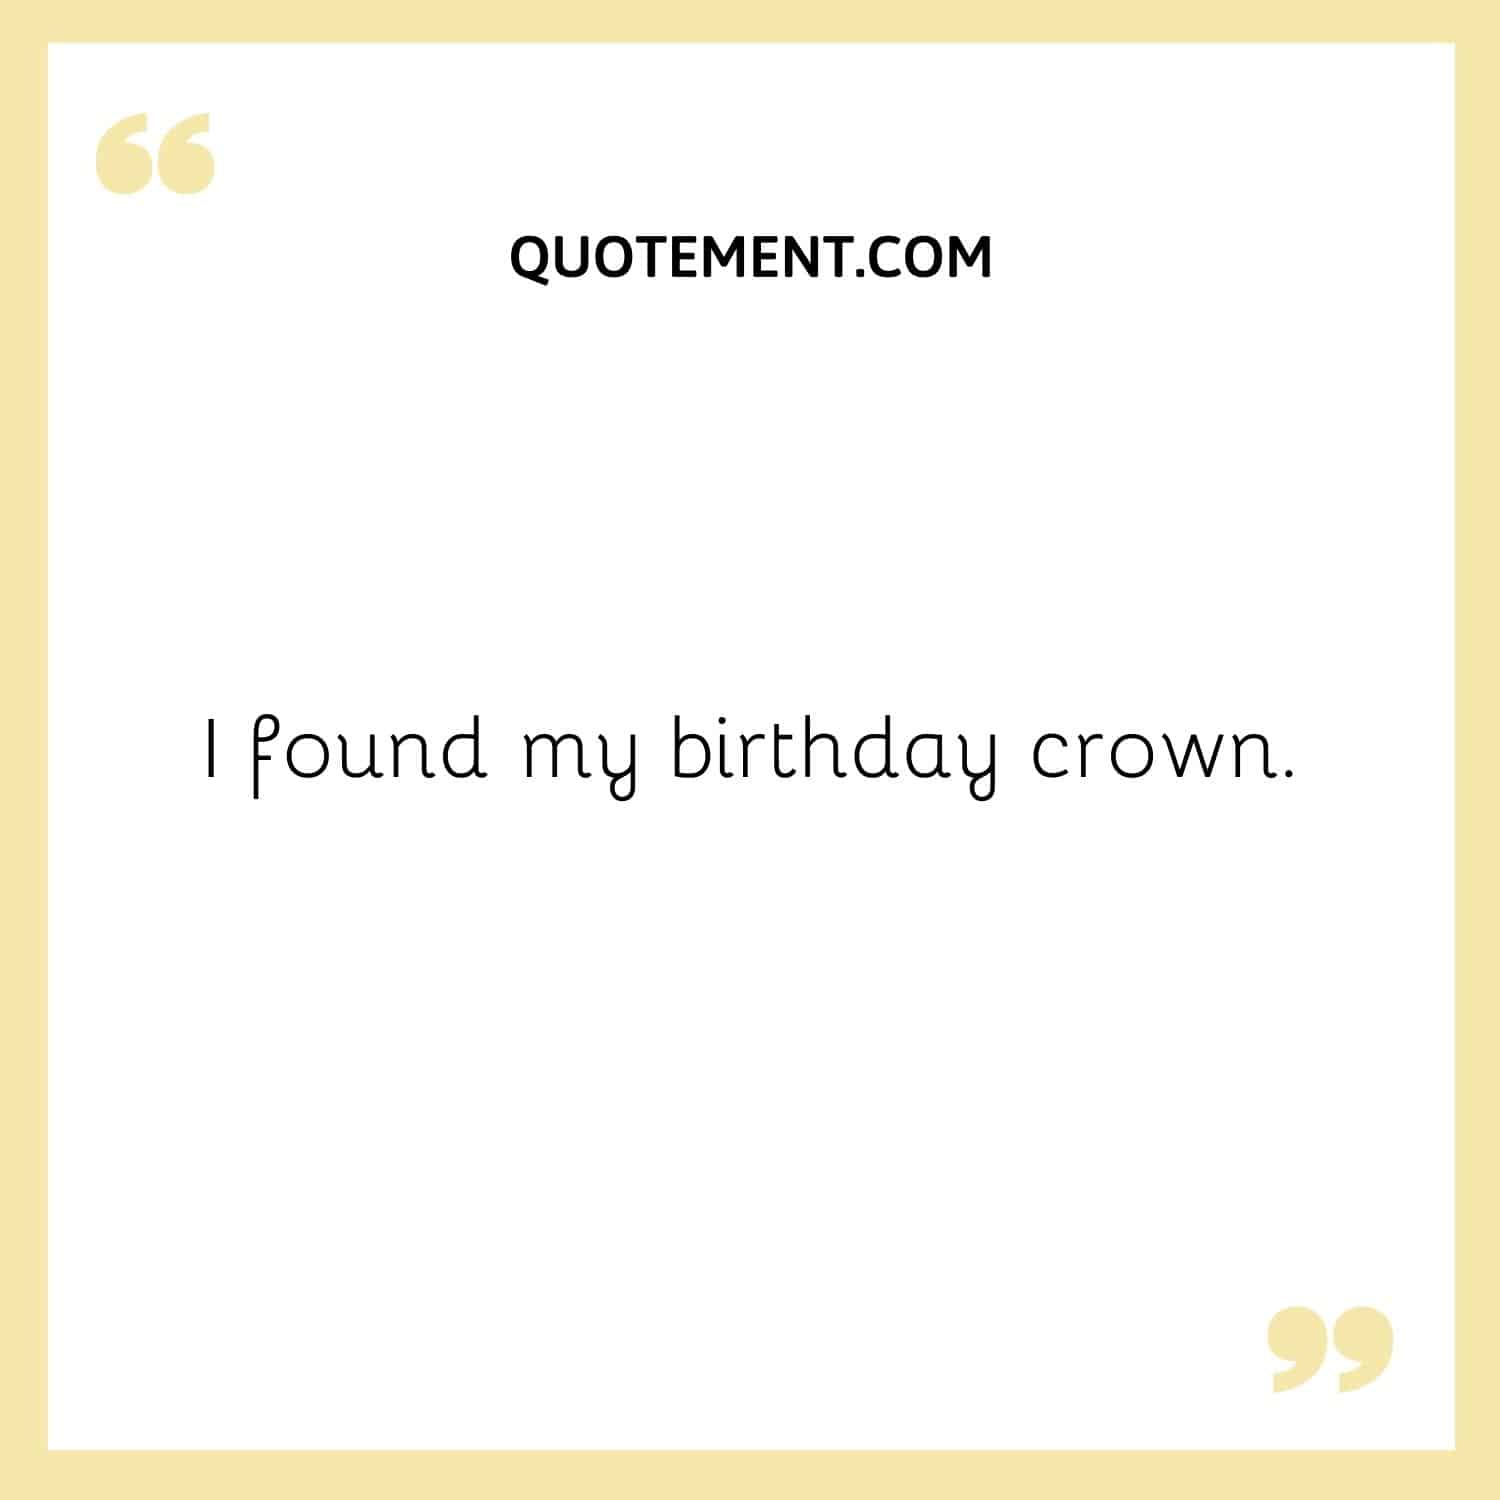 I found my birthday crown